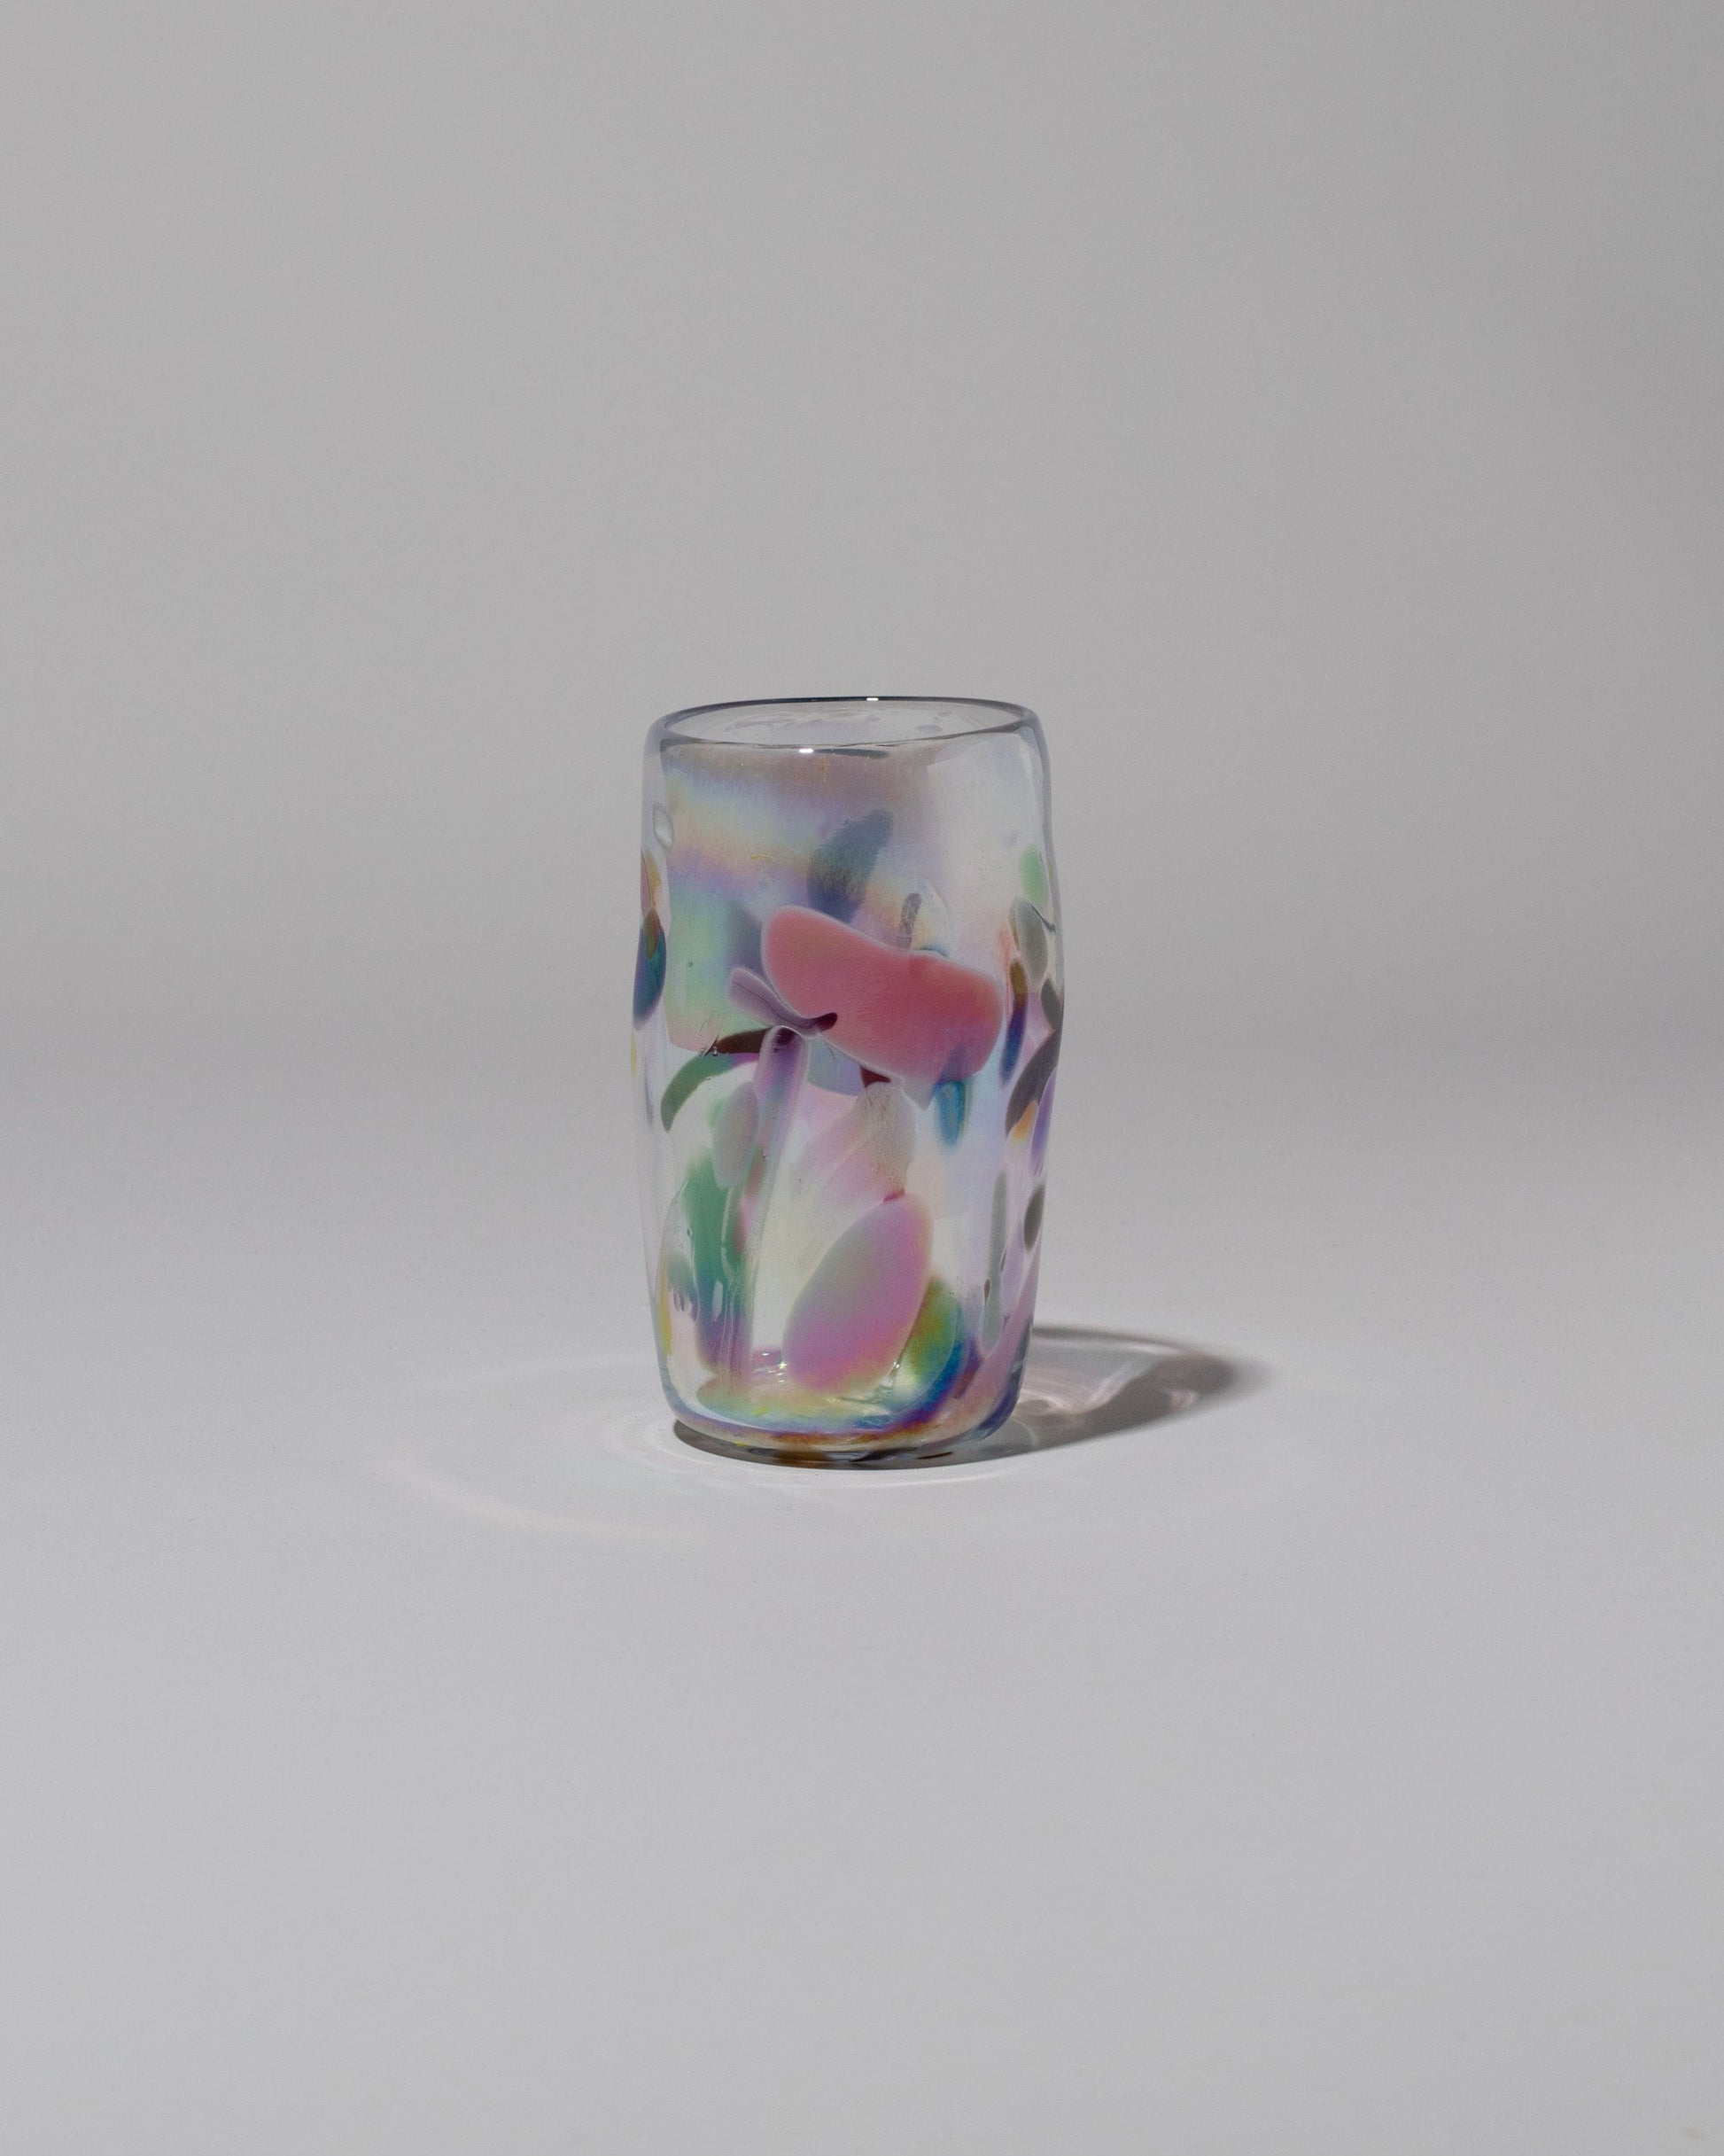  Iridescent Nassau Cup on light color background.